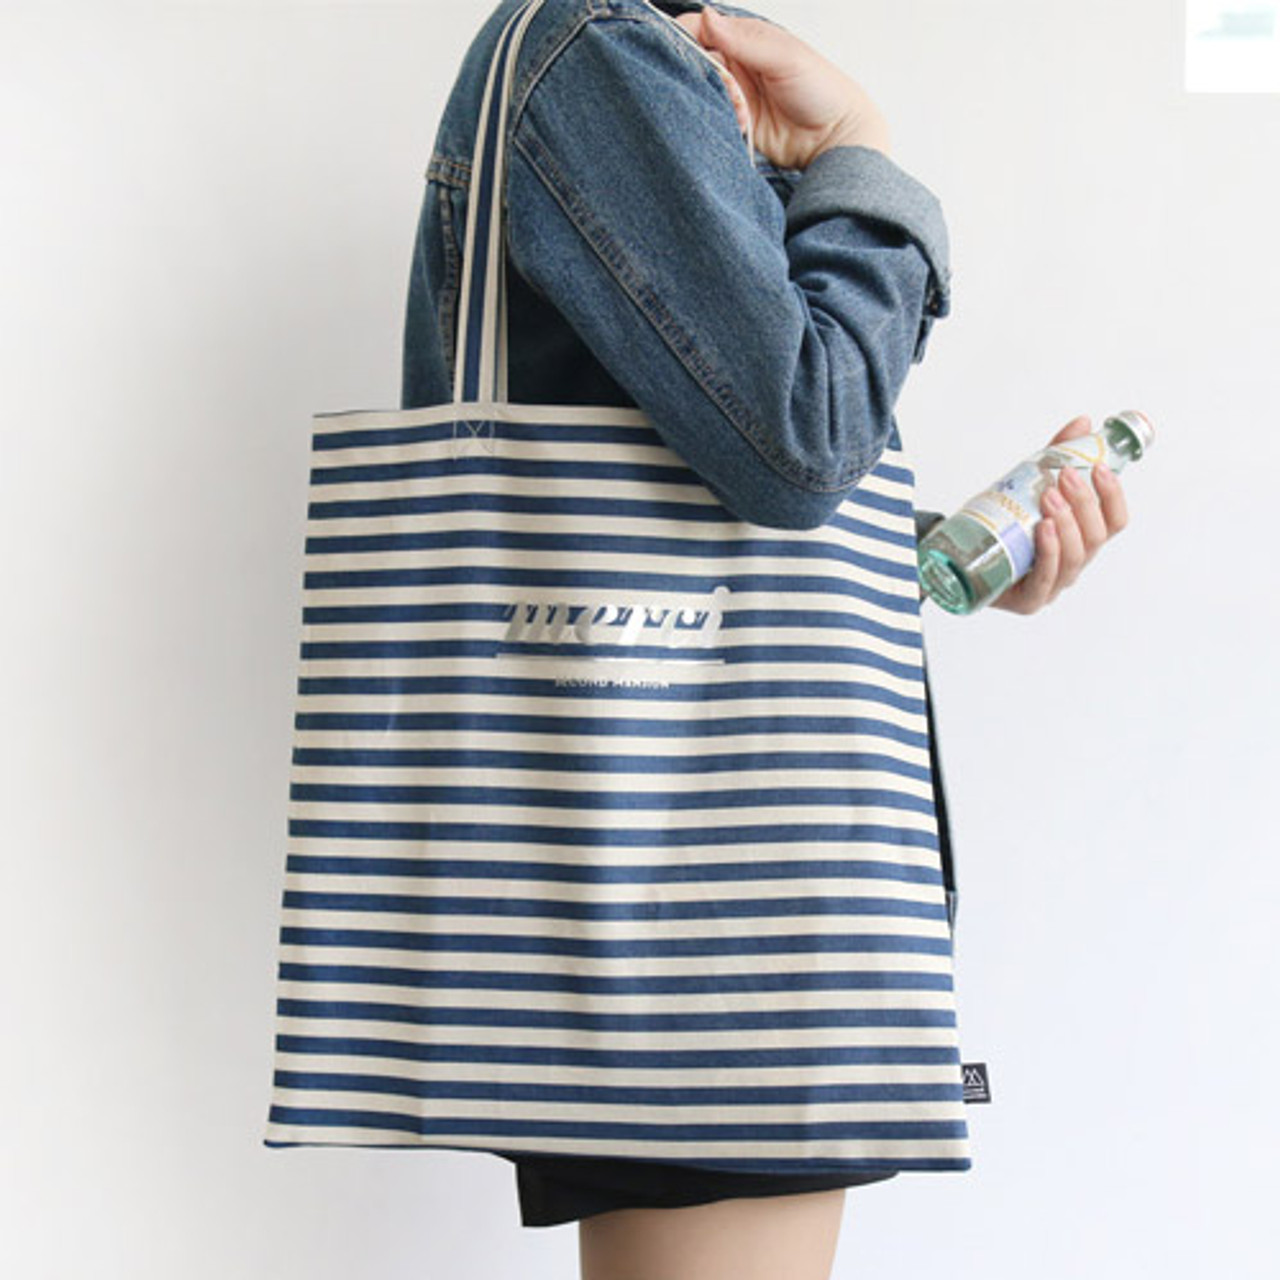 PlanD Merci fabric eco tote bag shoulder bag daily bag - fallindesign